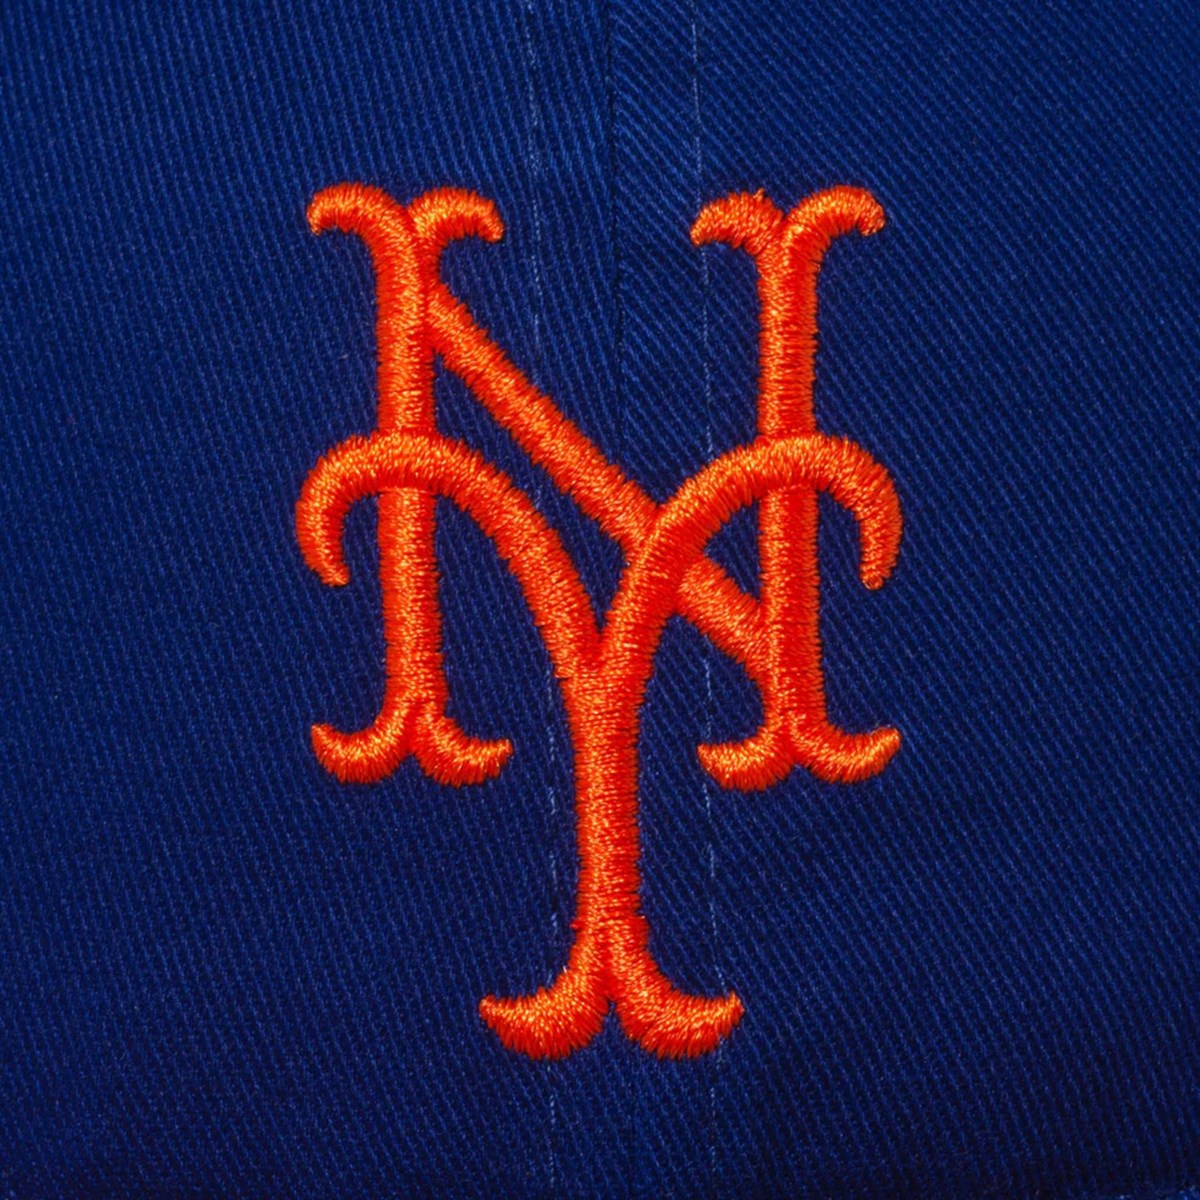 NEW ERA New York Mets - 930 GORO NEYMET DROY BORA【14124654】